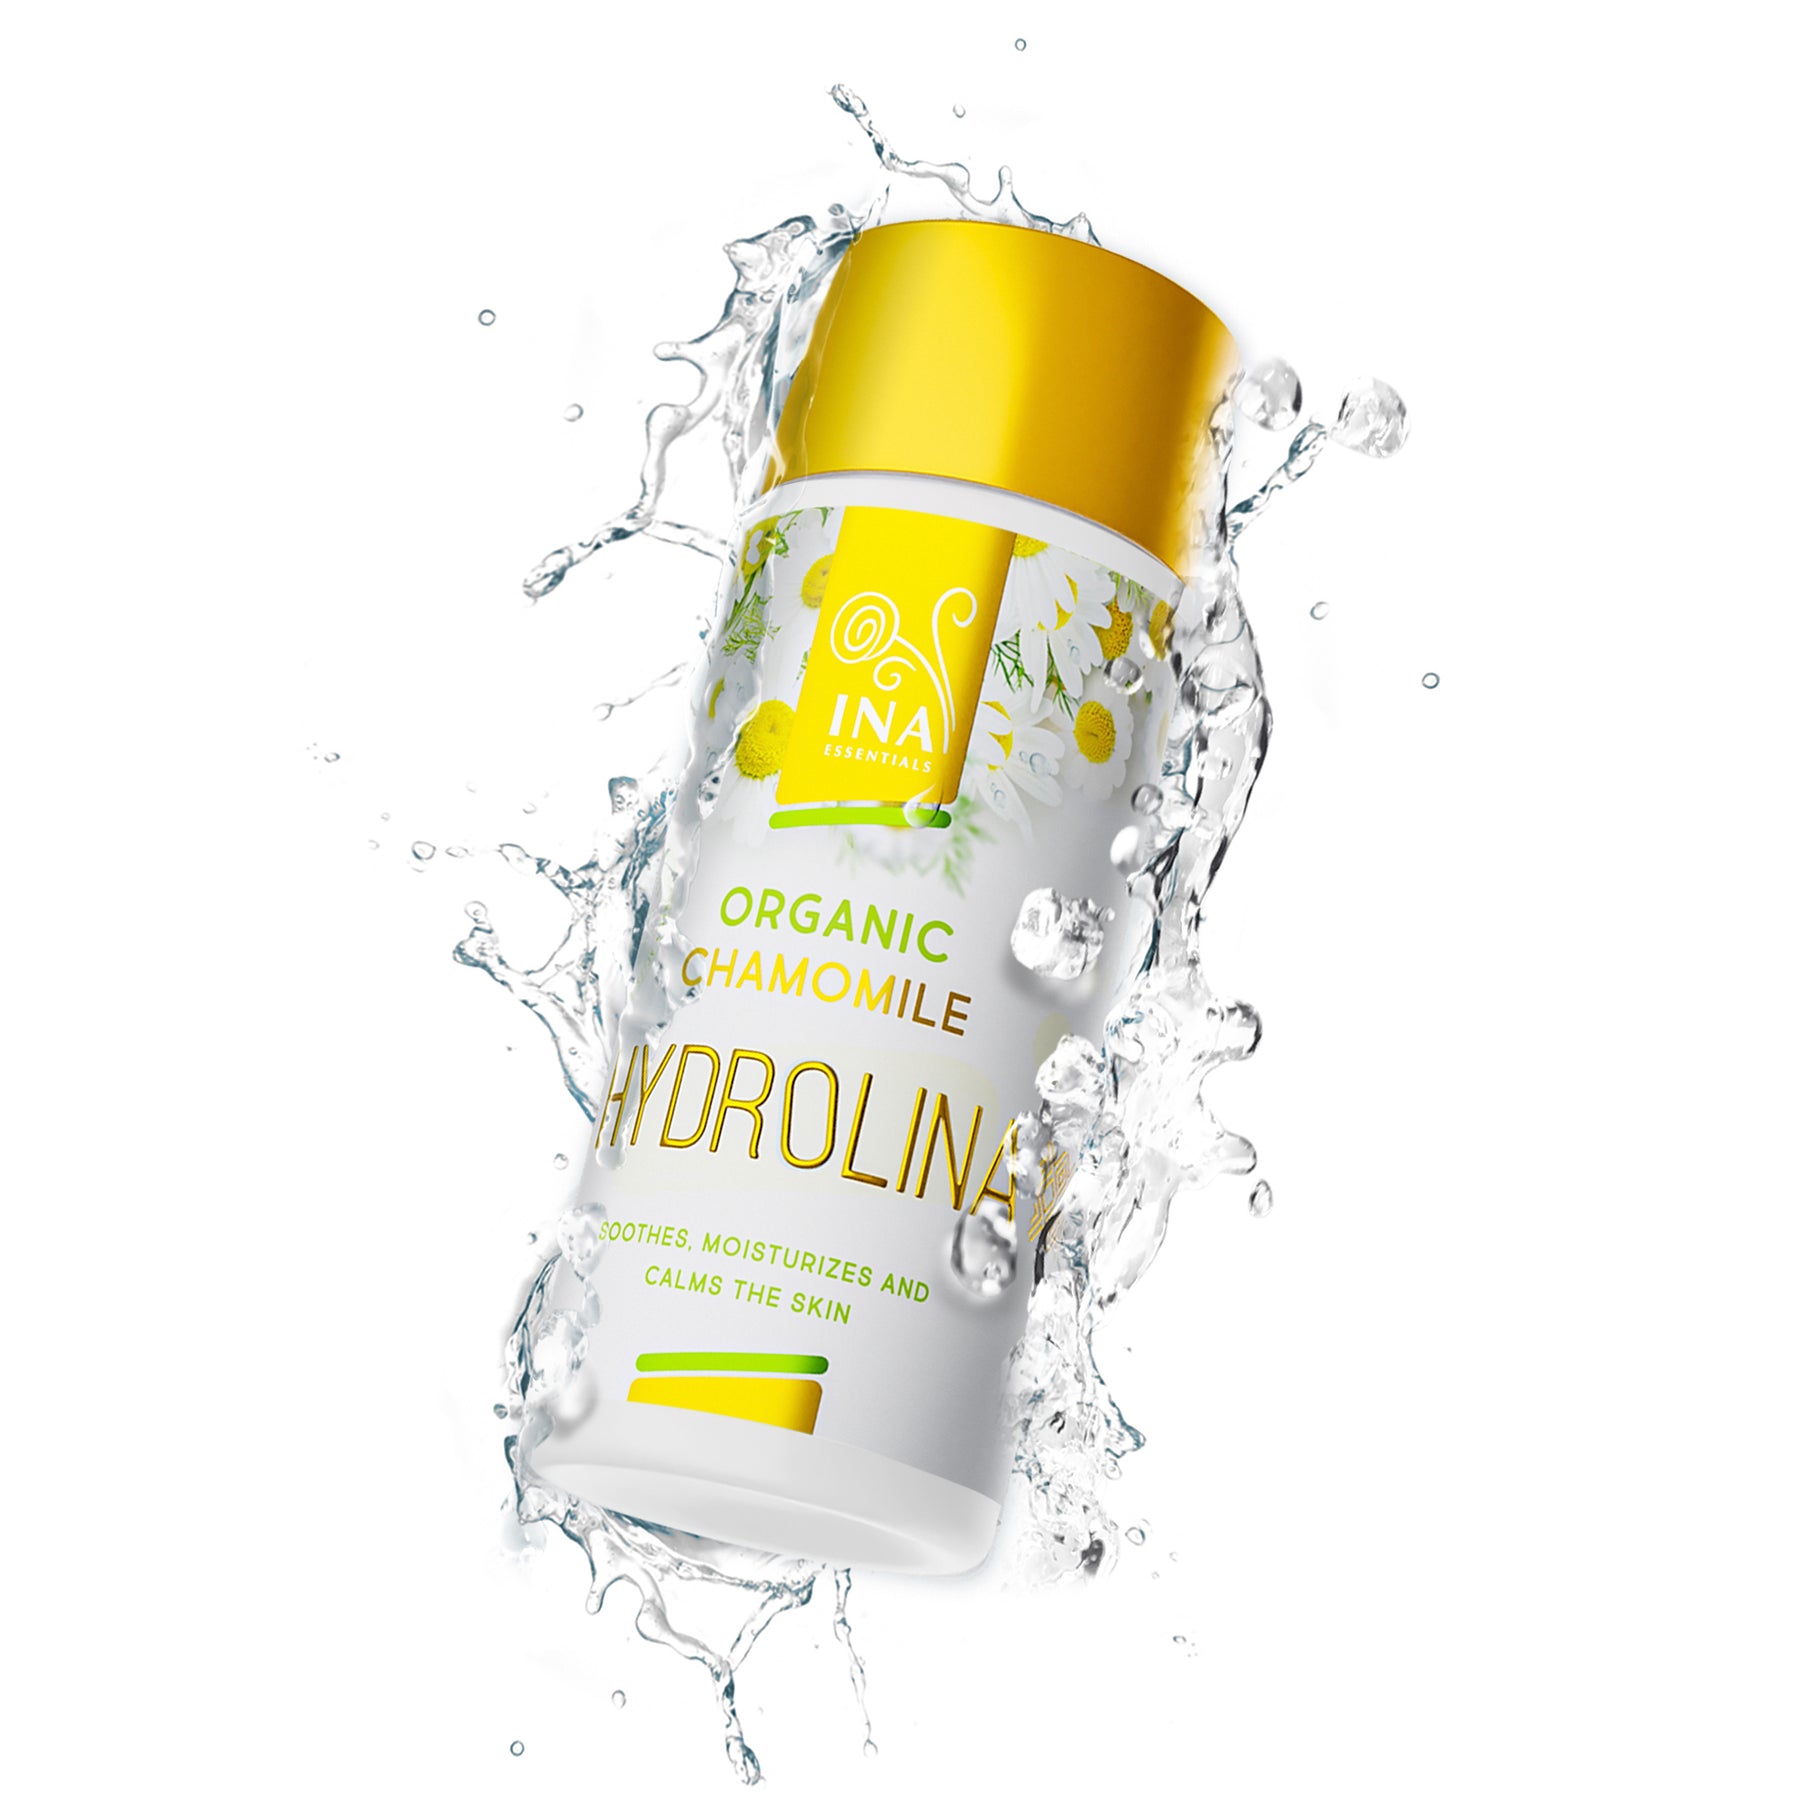 Organic Chamomile water - Hydrolina for Eczema and Irritated skin